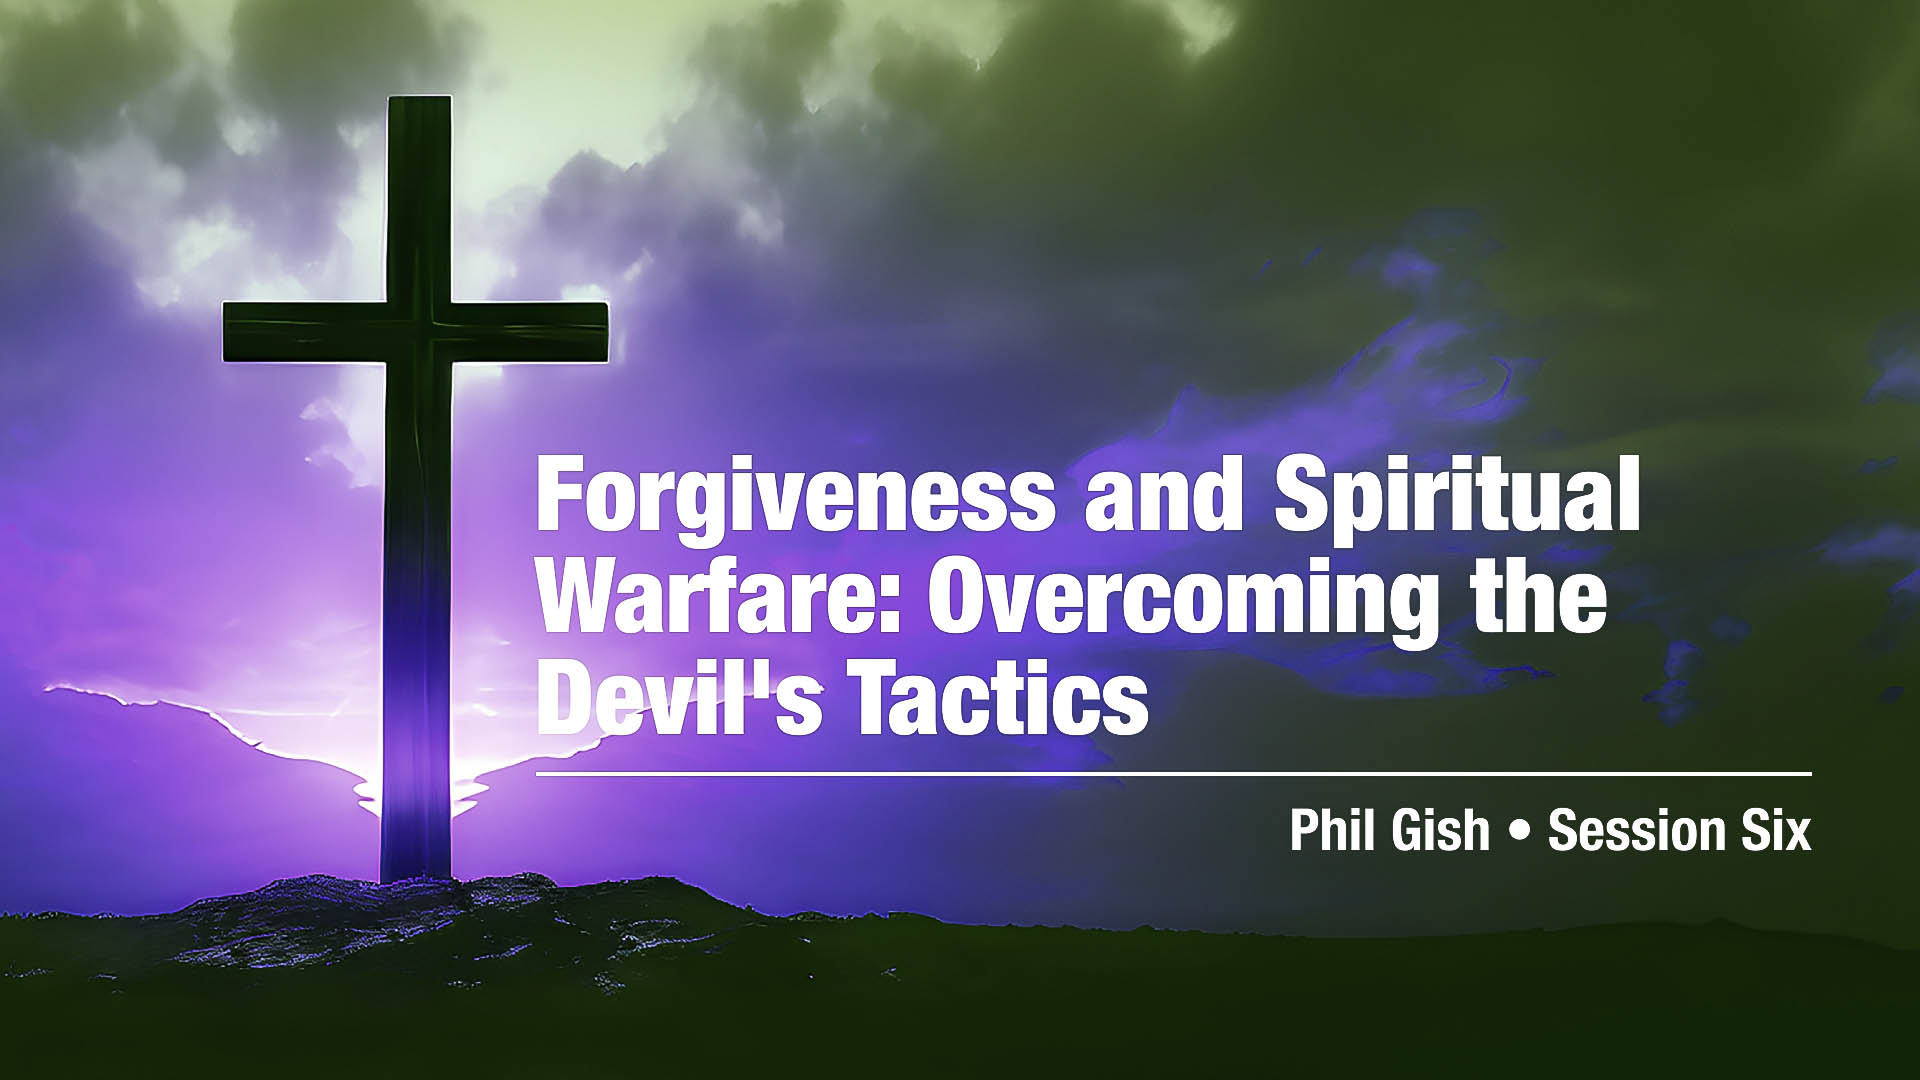 Dunkard Brethren Church| Leadership Conference | Forgiveness And Spiritual Warfare: Overcoming The Devil's Tactics